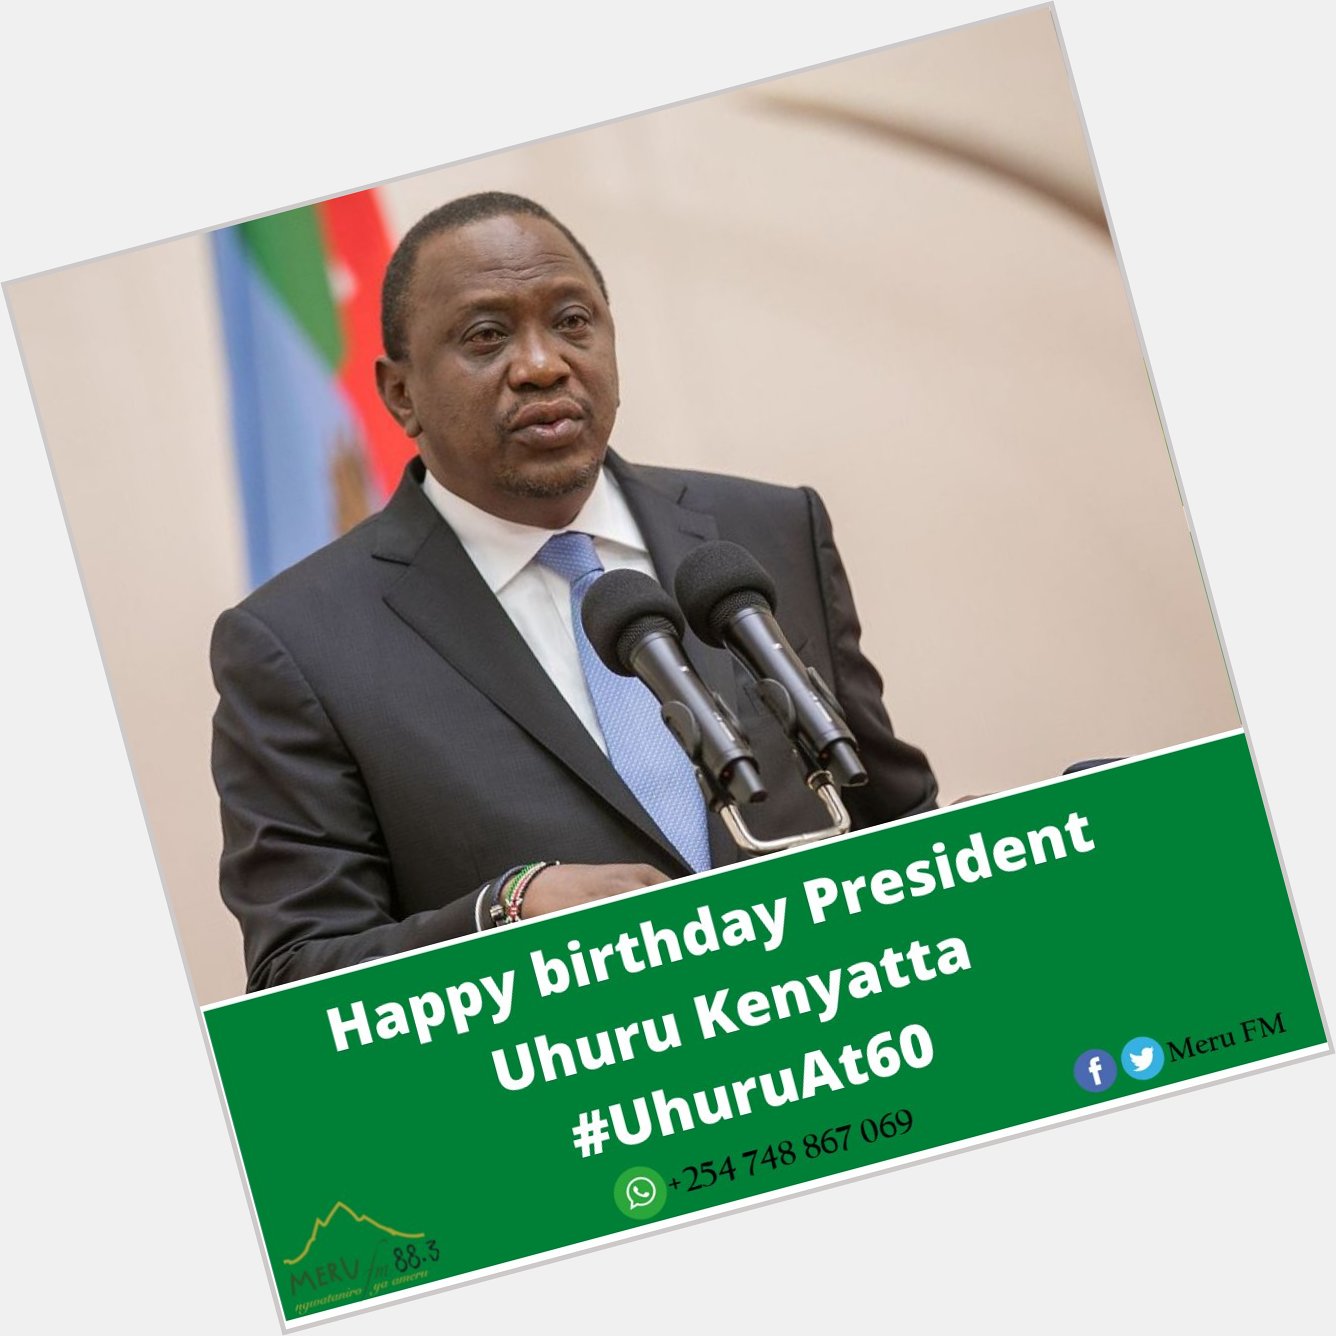 Happy birthday President Uhuru Kenyatta. 
Niatia wenda kwira Rais Uhuru Kenyatta?  